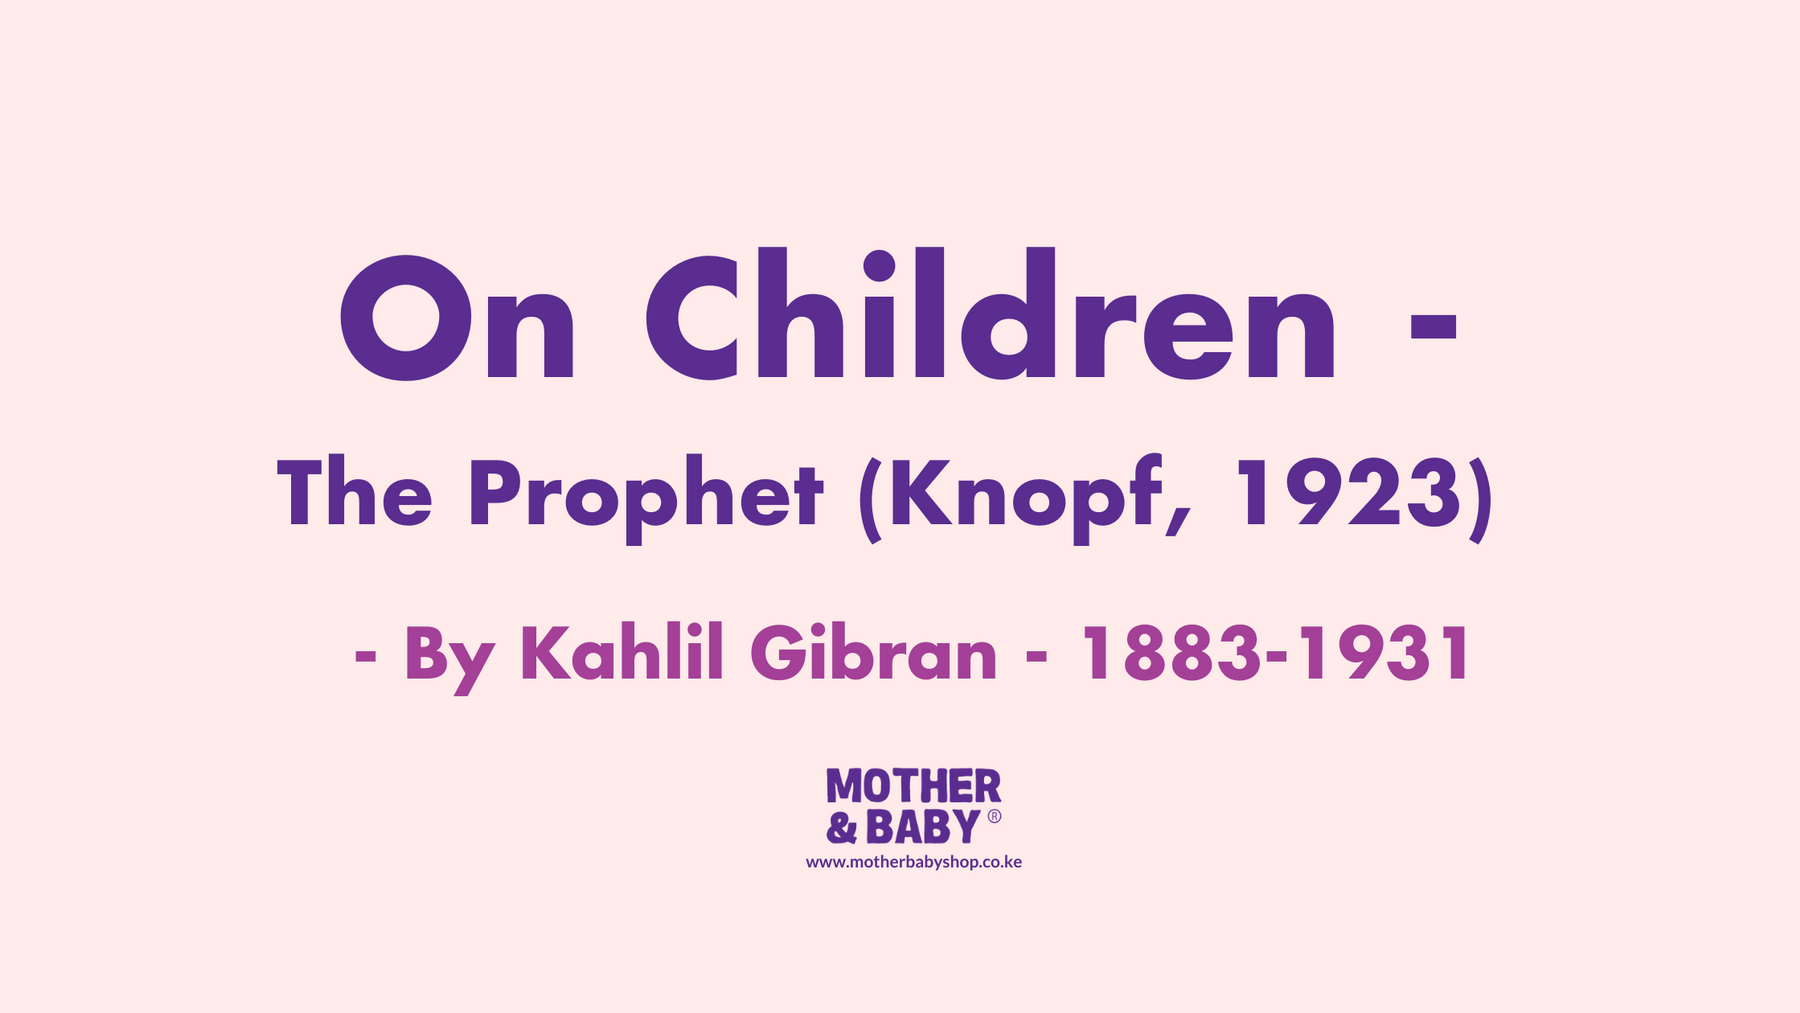 On Children - The Prophet (Knopf, 1923) , by Kahlil Gibran.